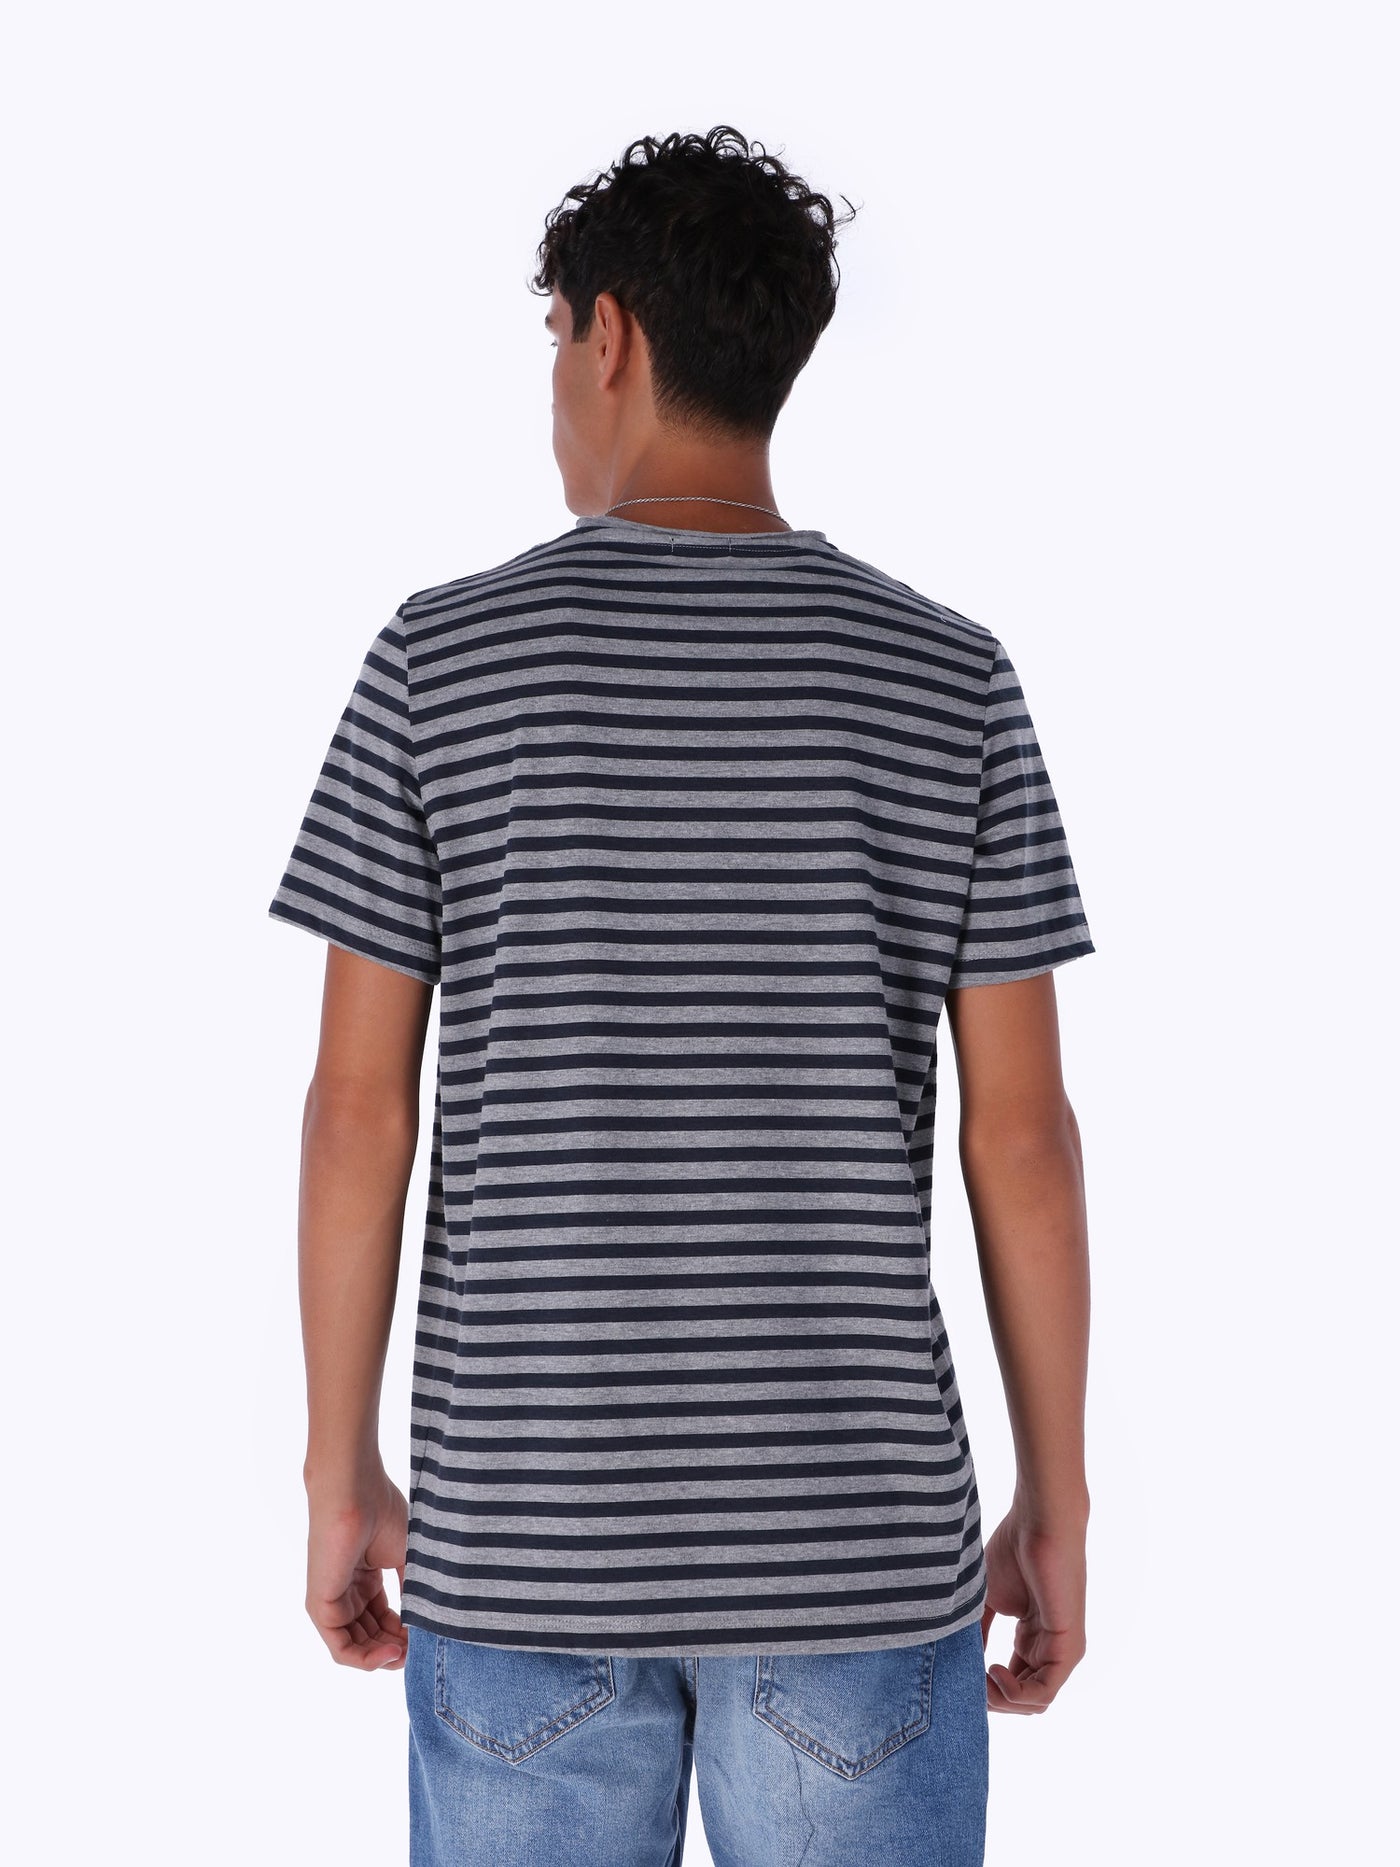 Horizontal Striped T-Shirts